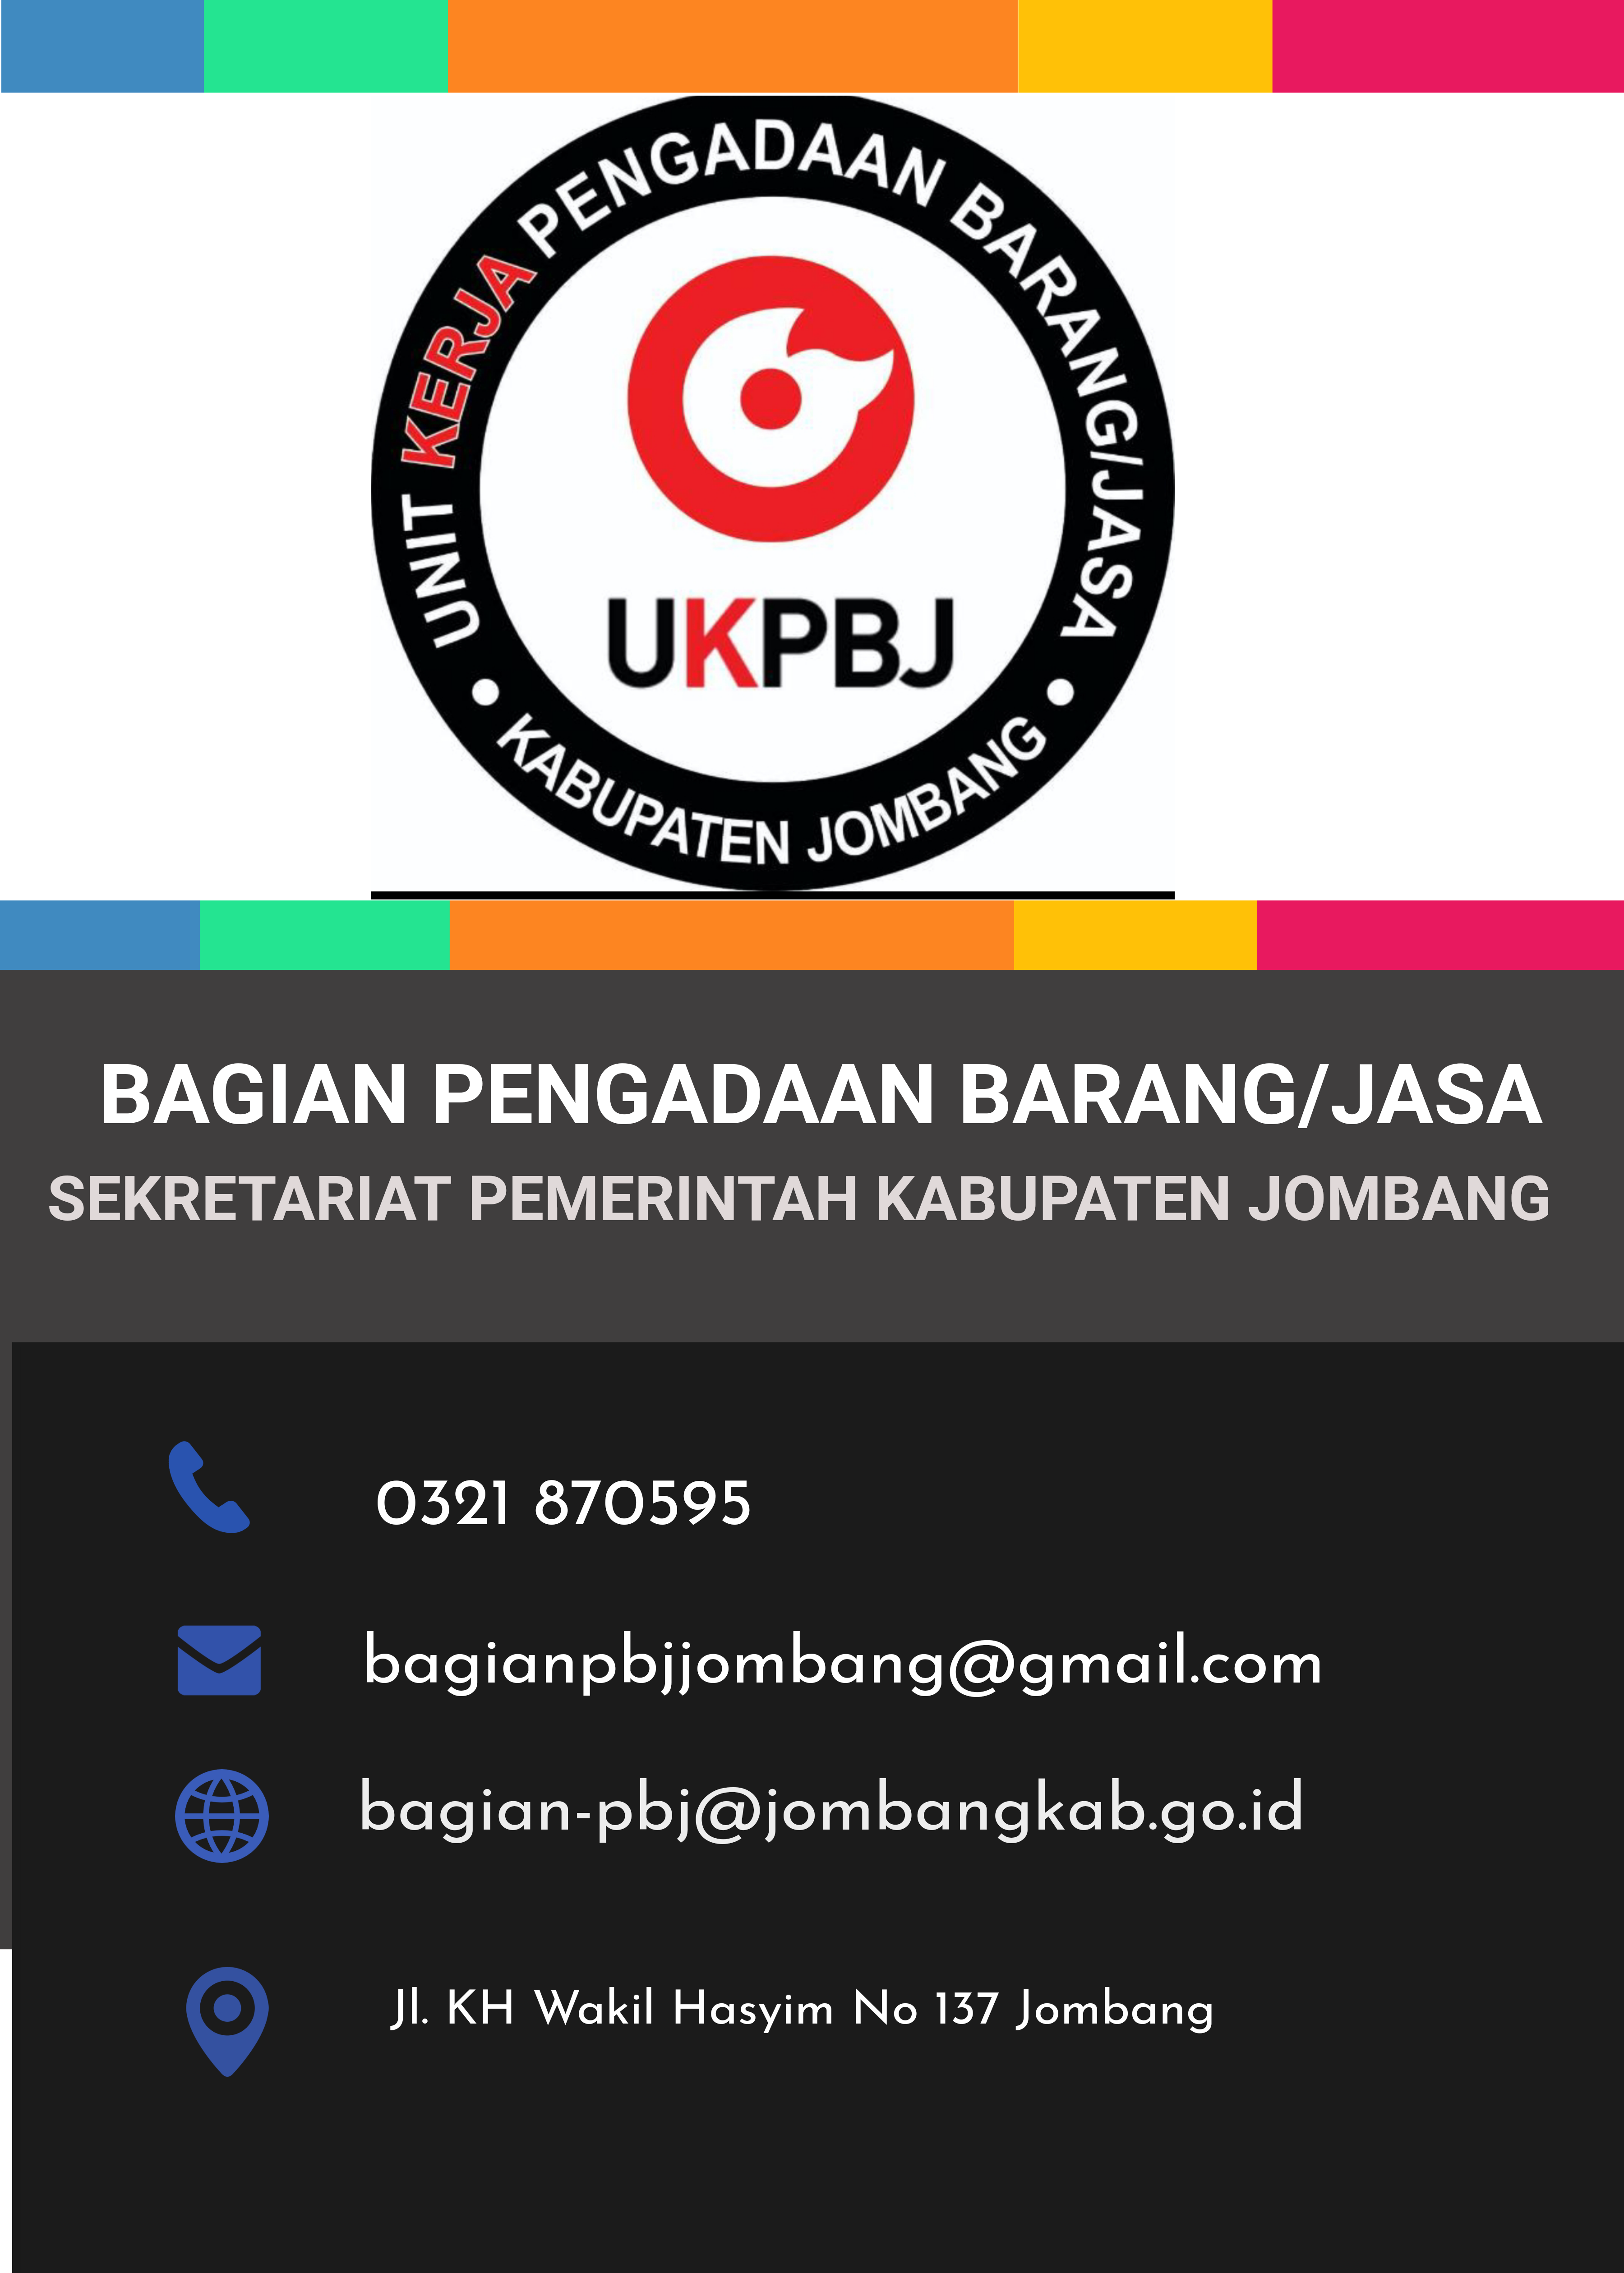 Selamat Datang di Website Bagian Pengadaan Barang/Jasa Kabupaten Jombang